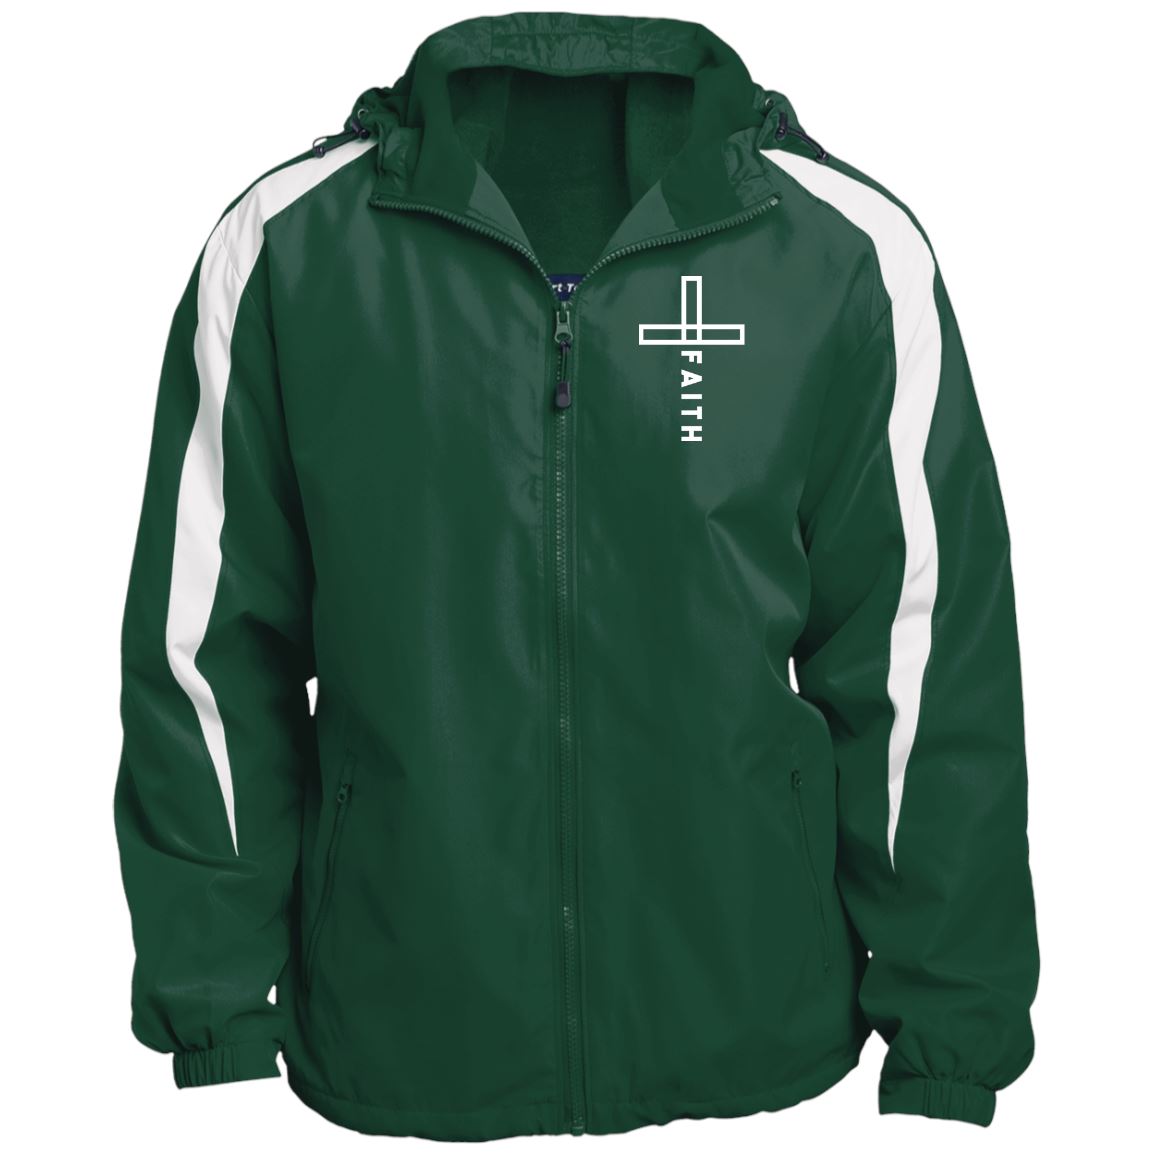 Cross Faith Fleece Lined Colorblocked Hooded Christian Jacket CustomCat Forest Green/White X-Small 